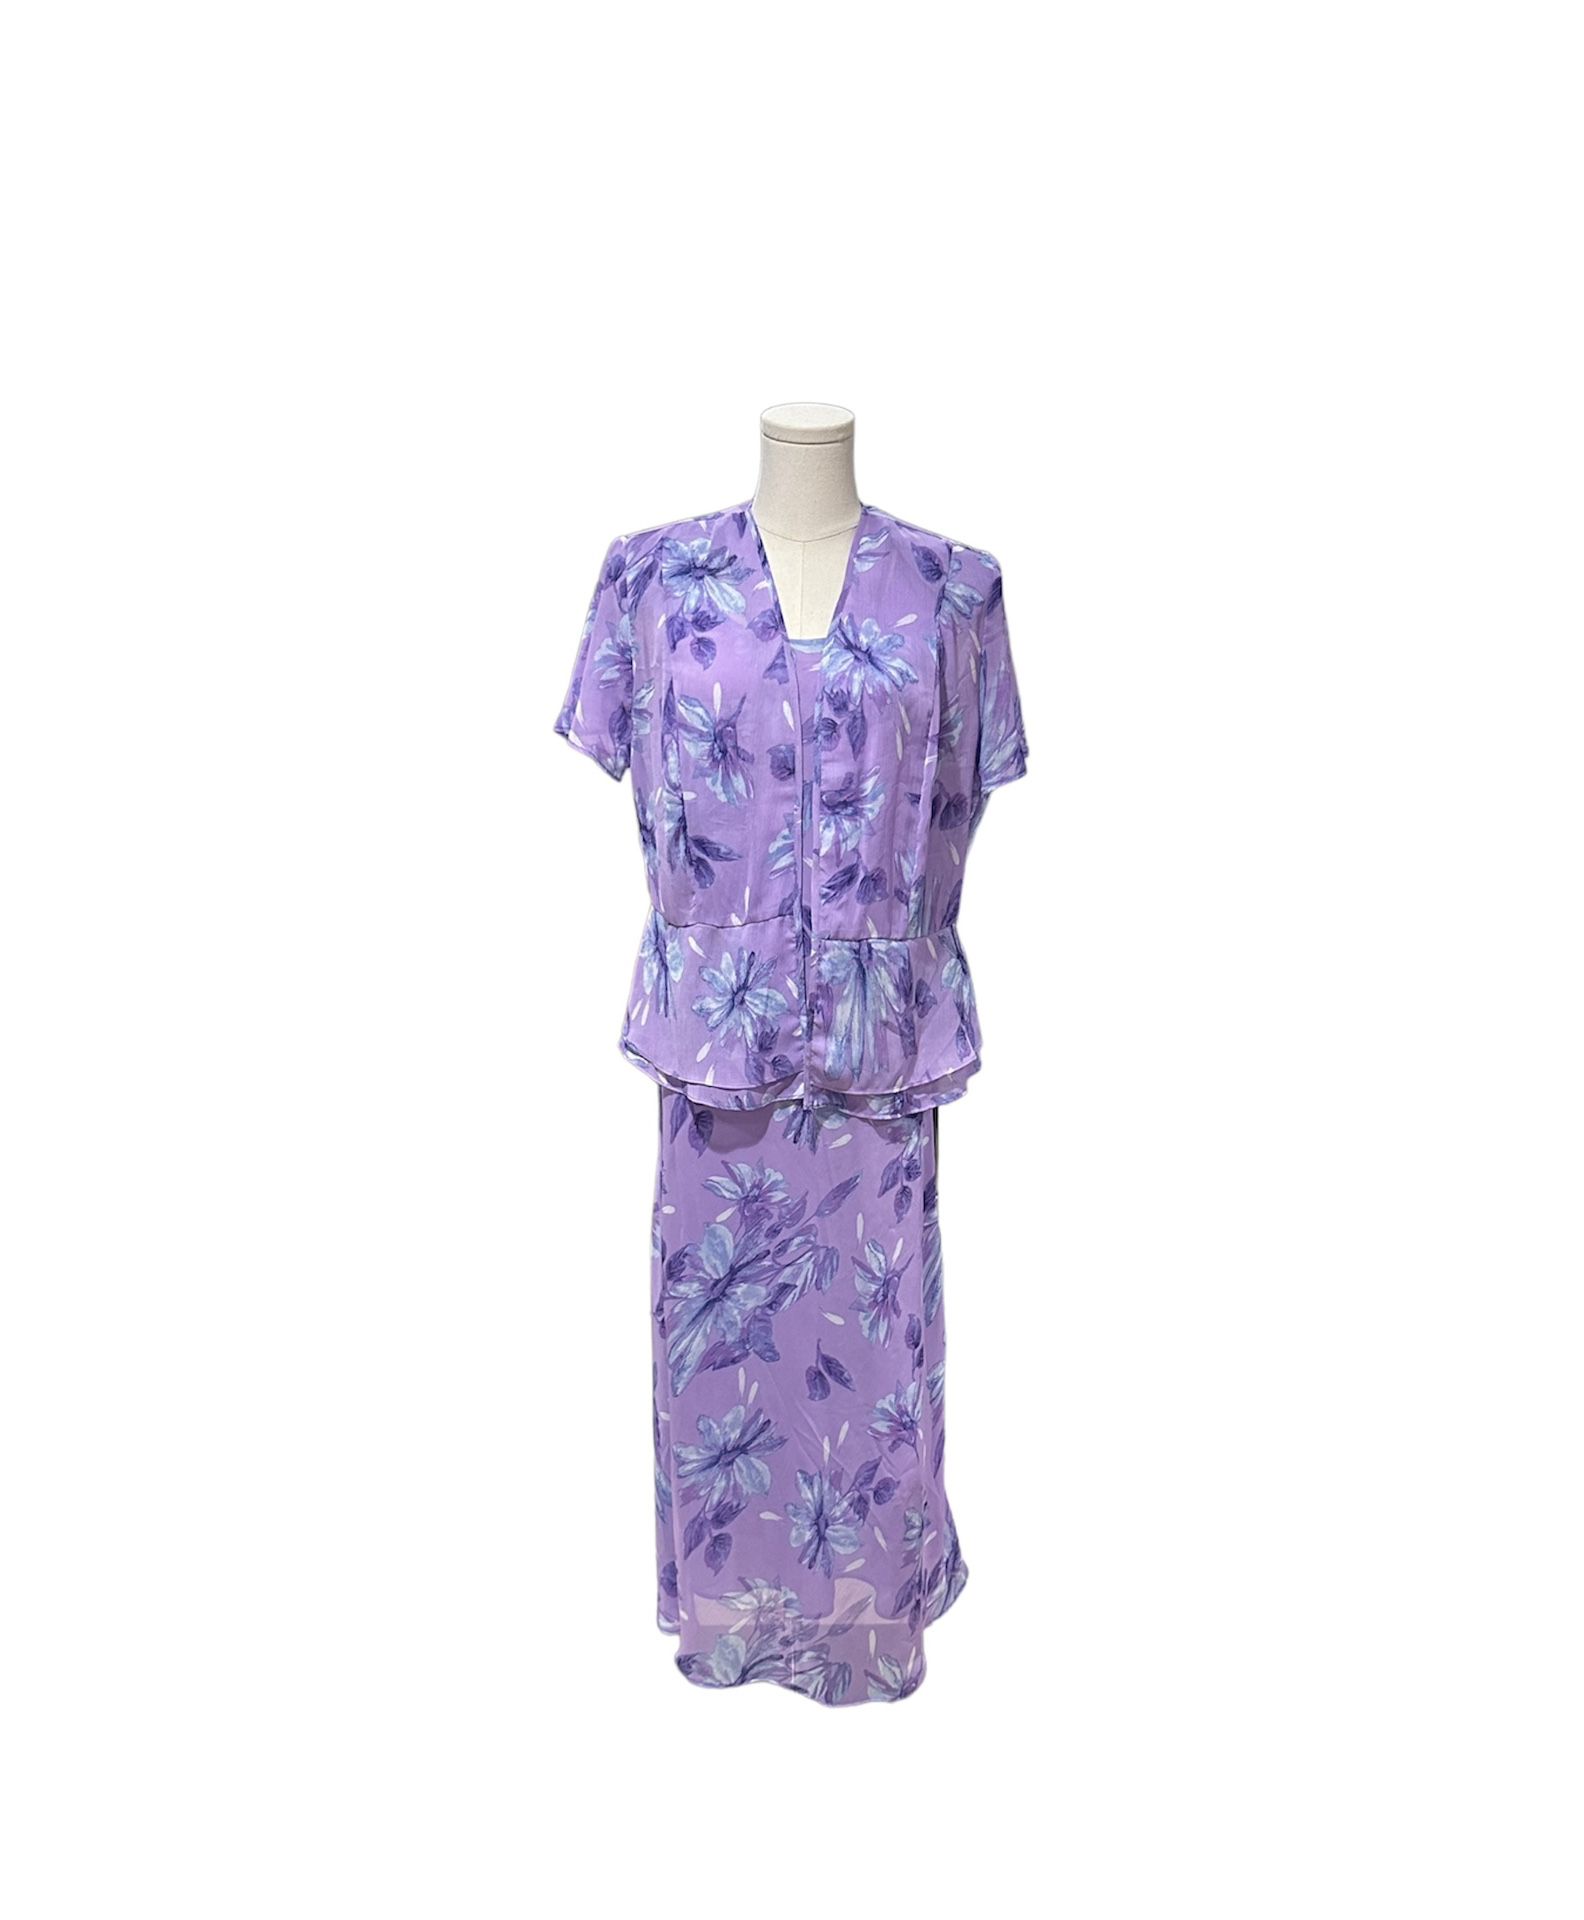 Studio I Floral Design Purple Maxi Dress and Jacket Set, Size 12